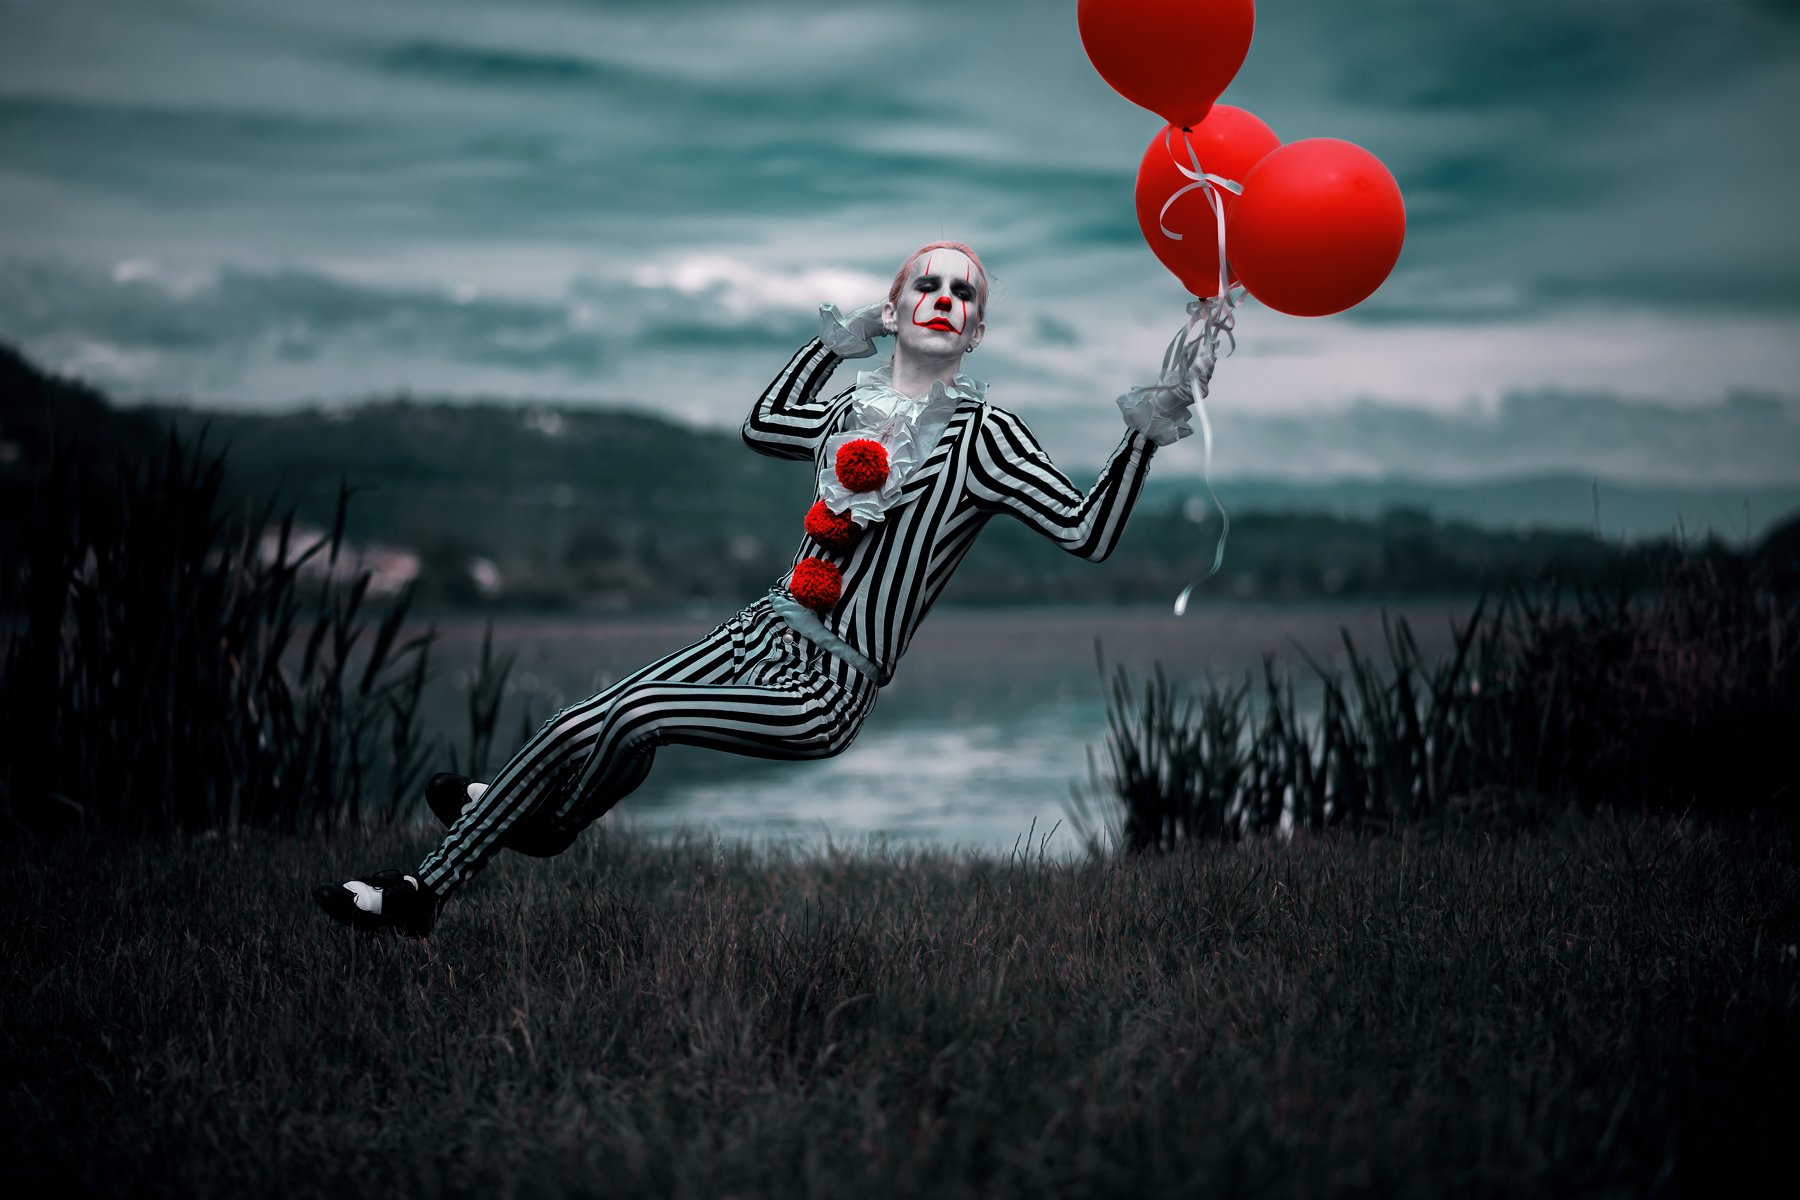 #it #redballoon #cosplay #lake #levitation #cinemamood #dark, Sabrina DAlonzo